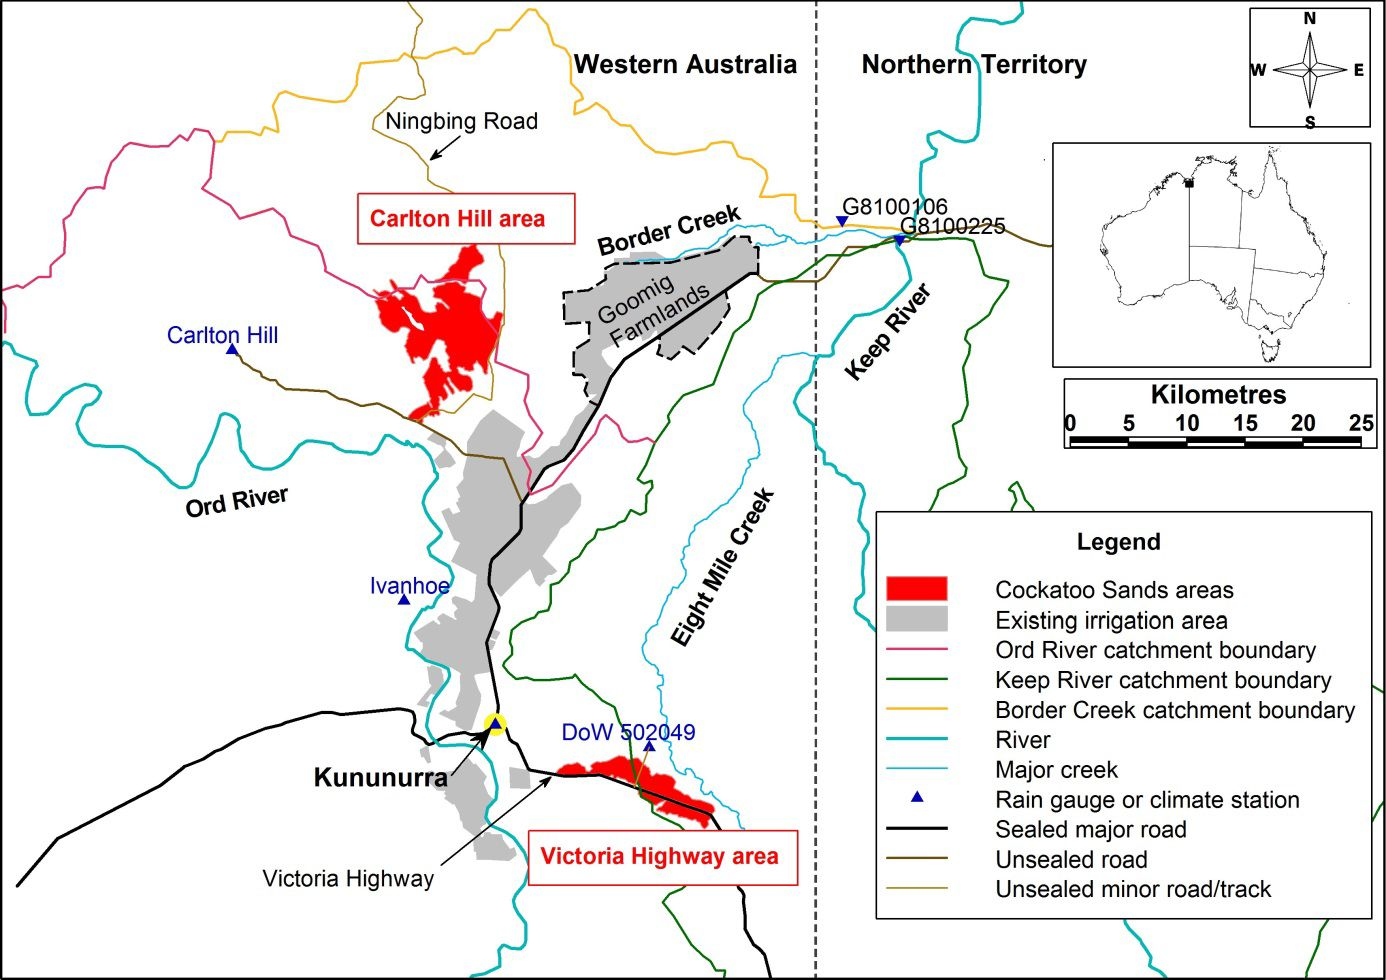 Map of the Cockatoo Sands study area in relation to Kununurra